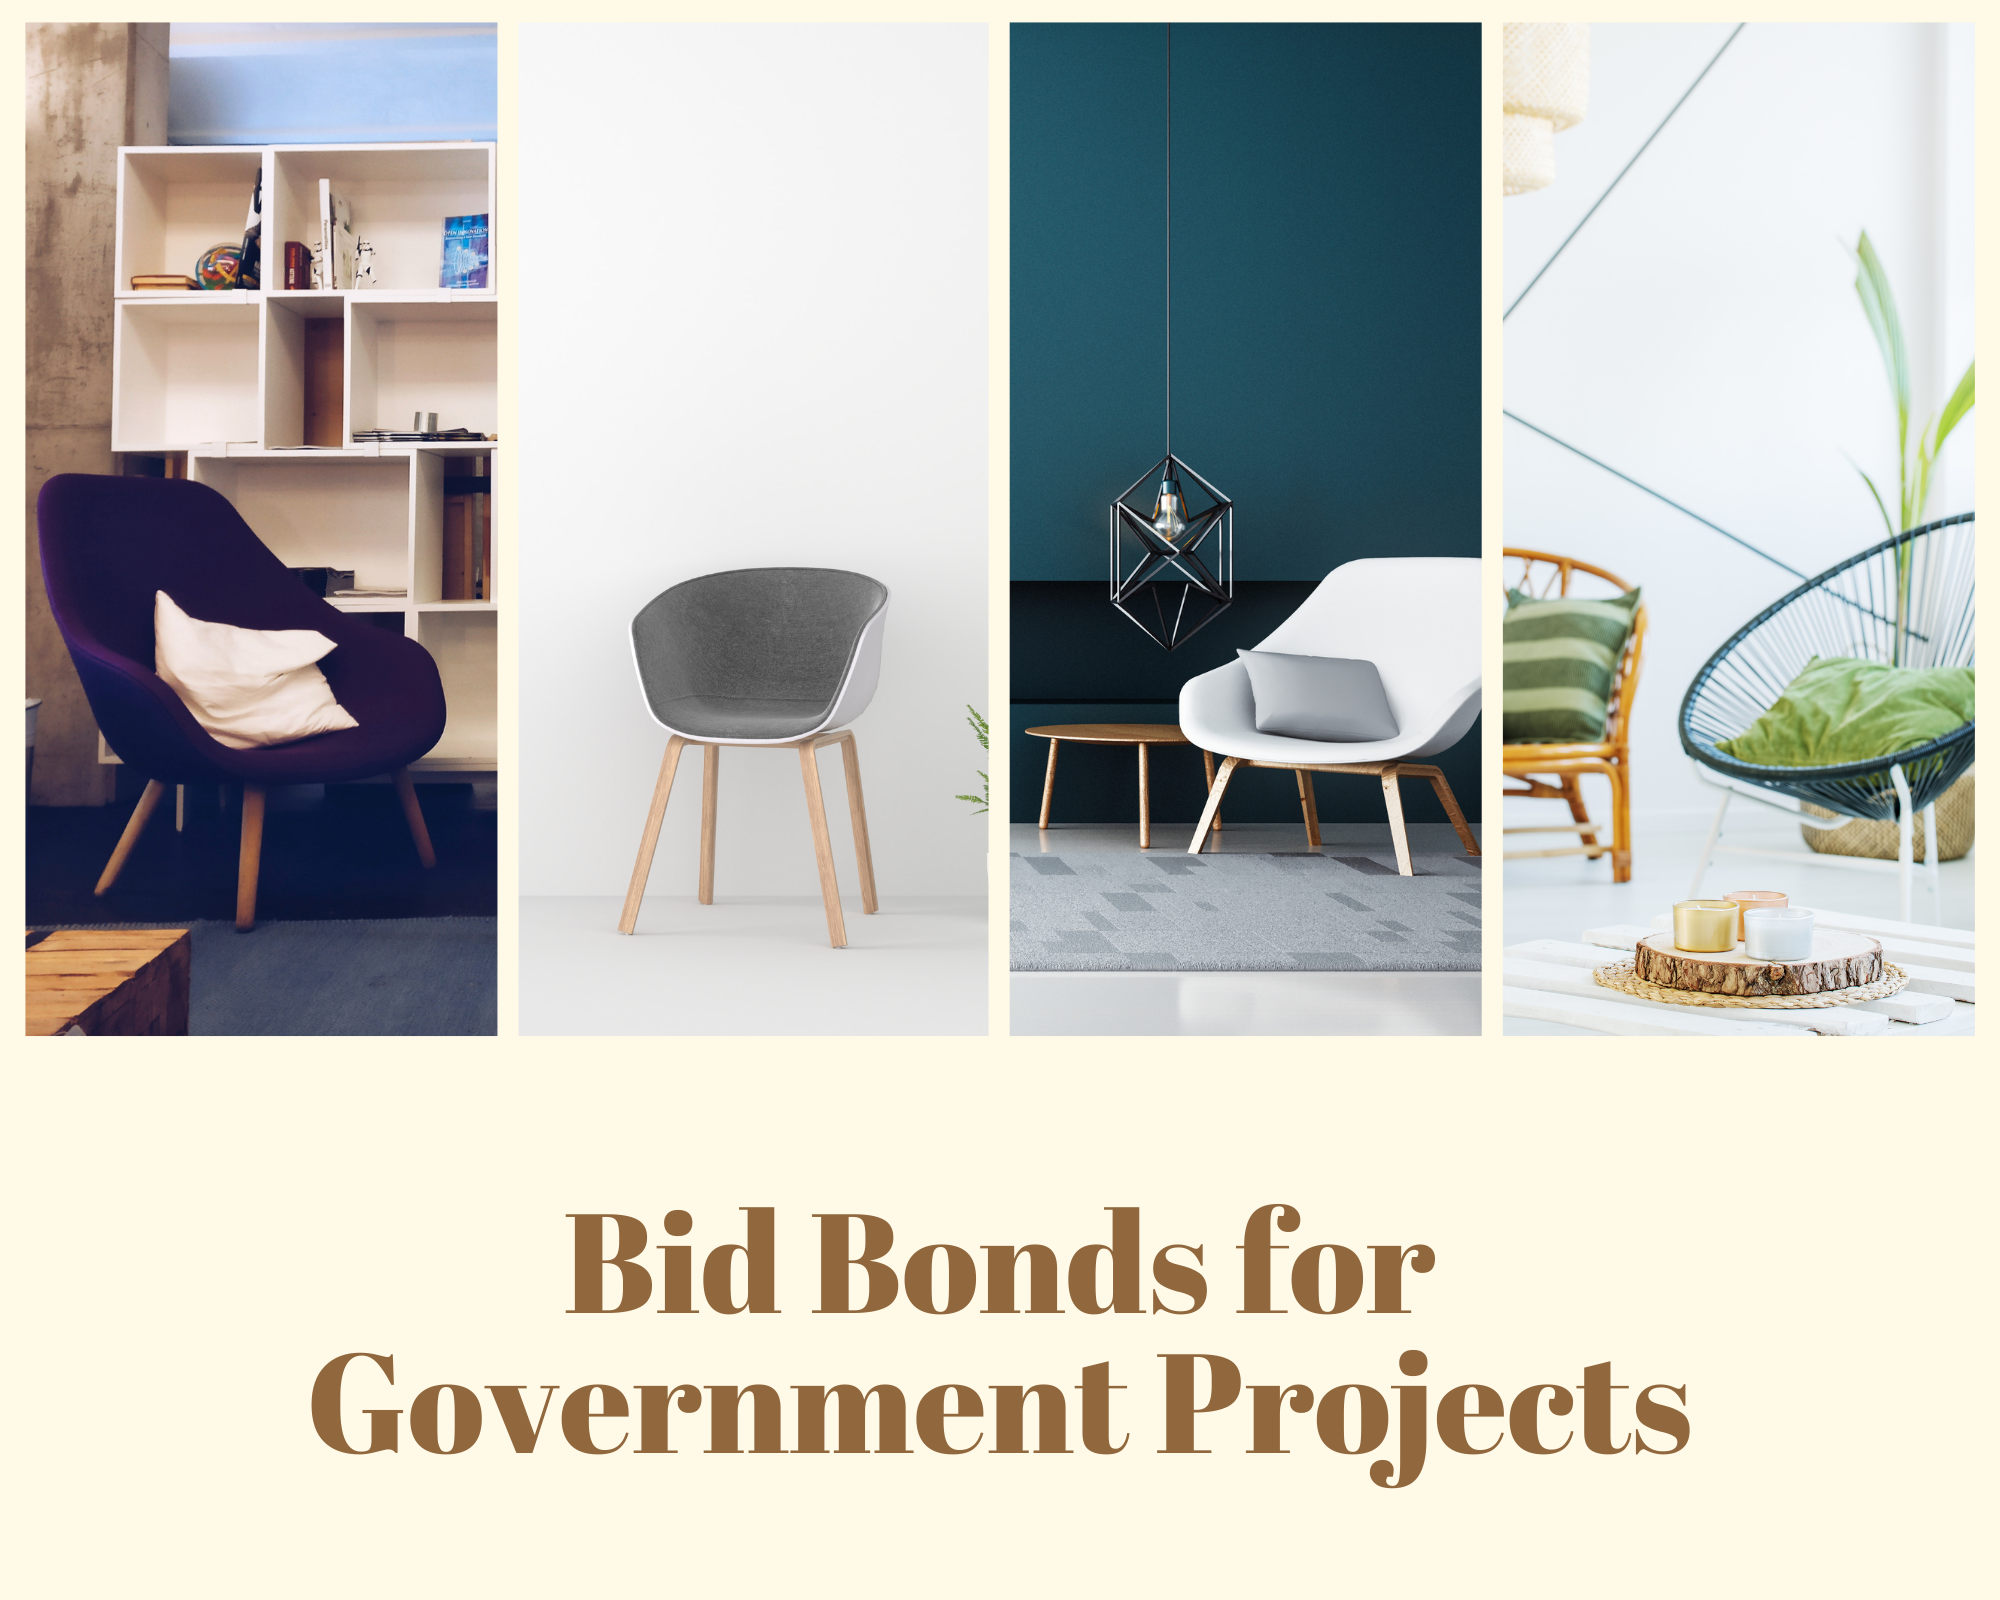 bid bonds - what is a bid bond - modern home interior